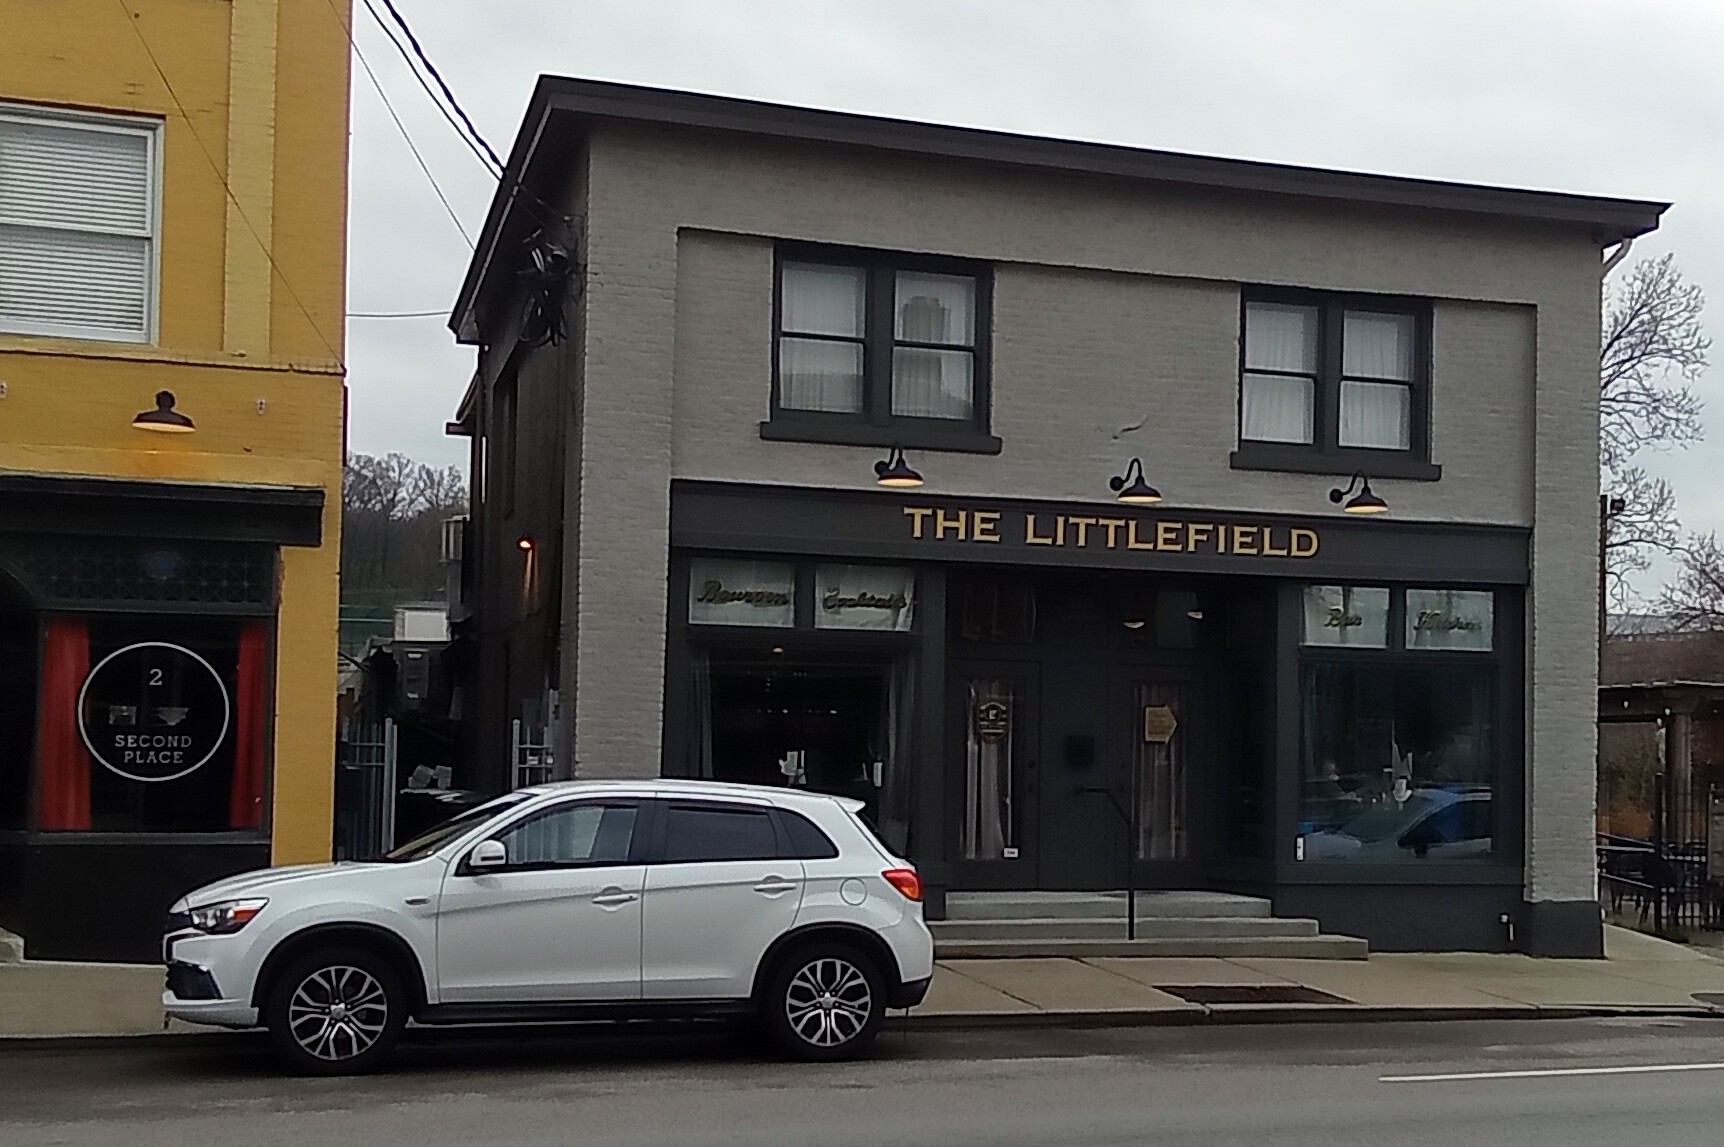 The Littlefield